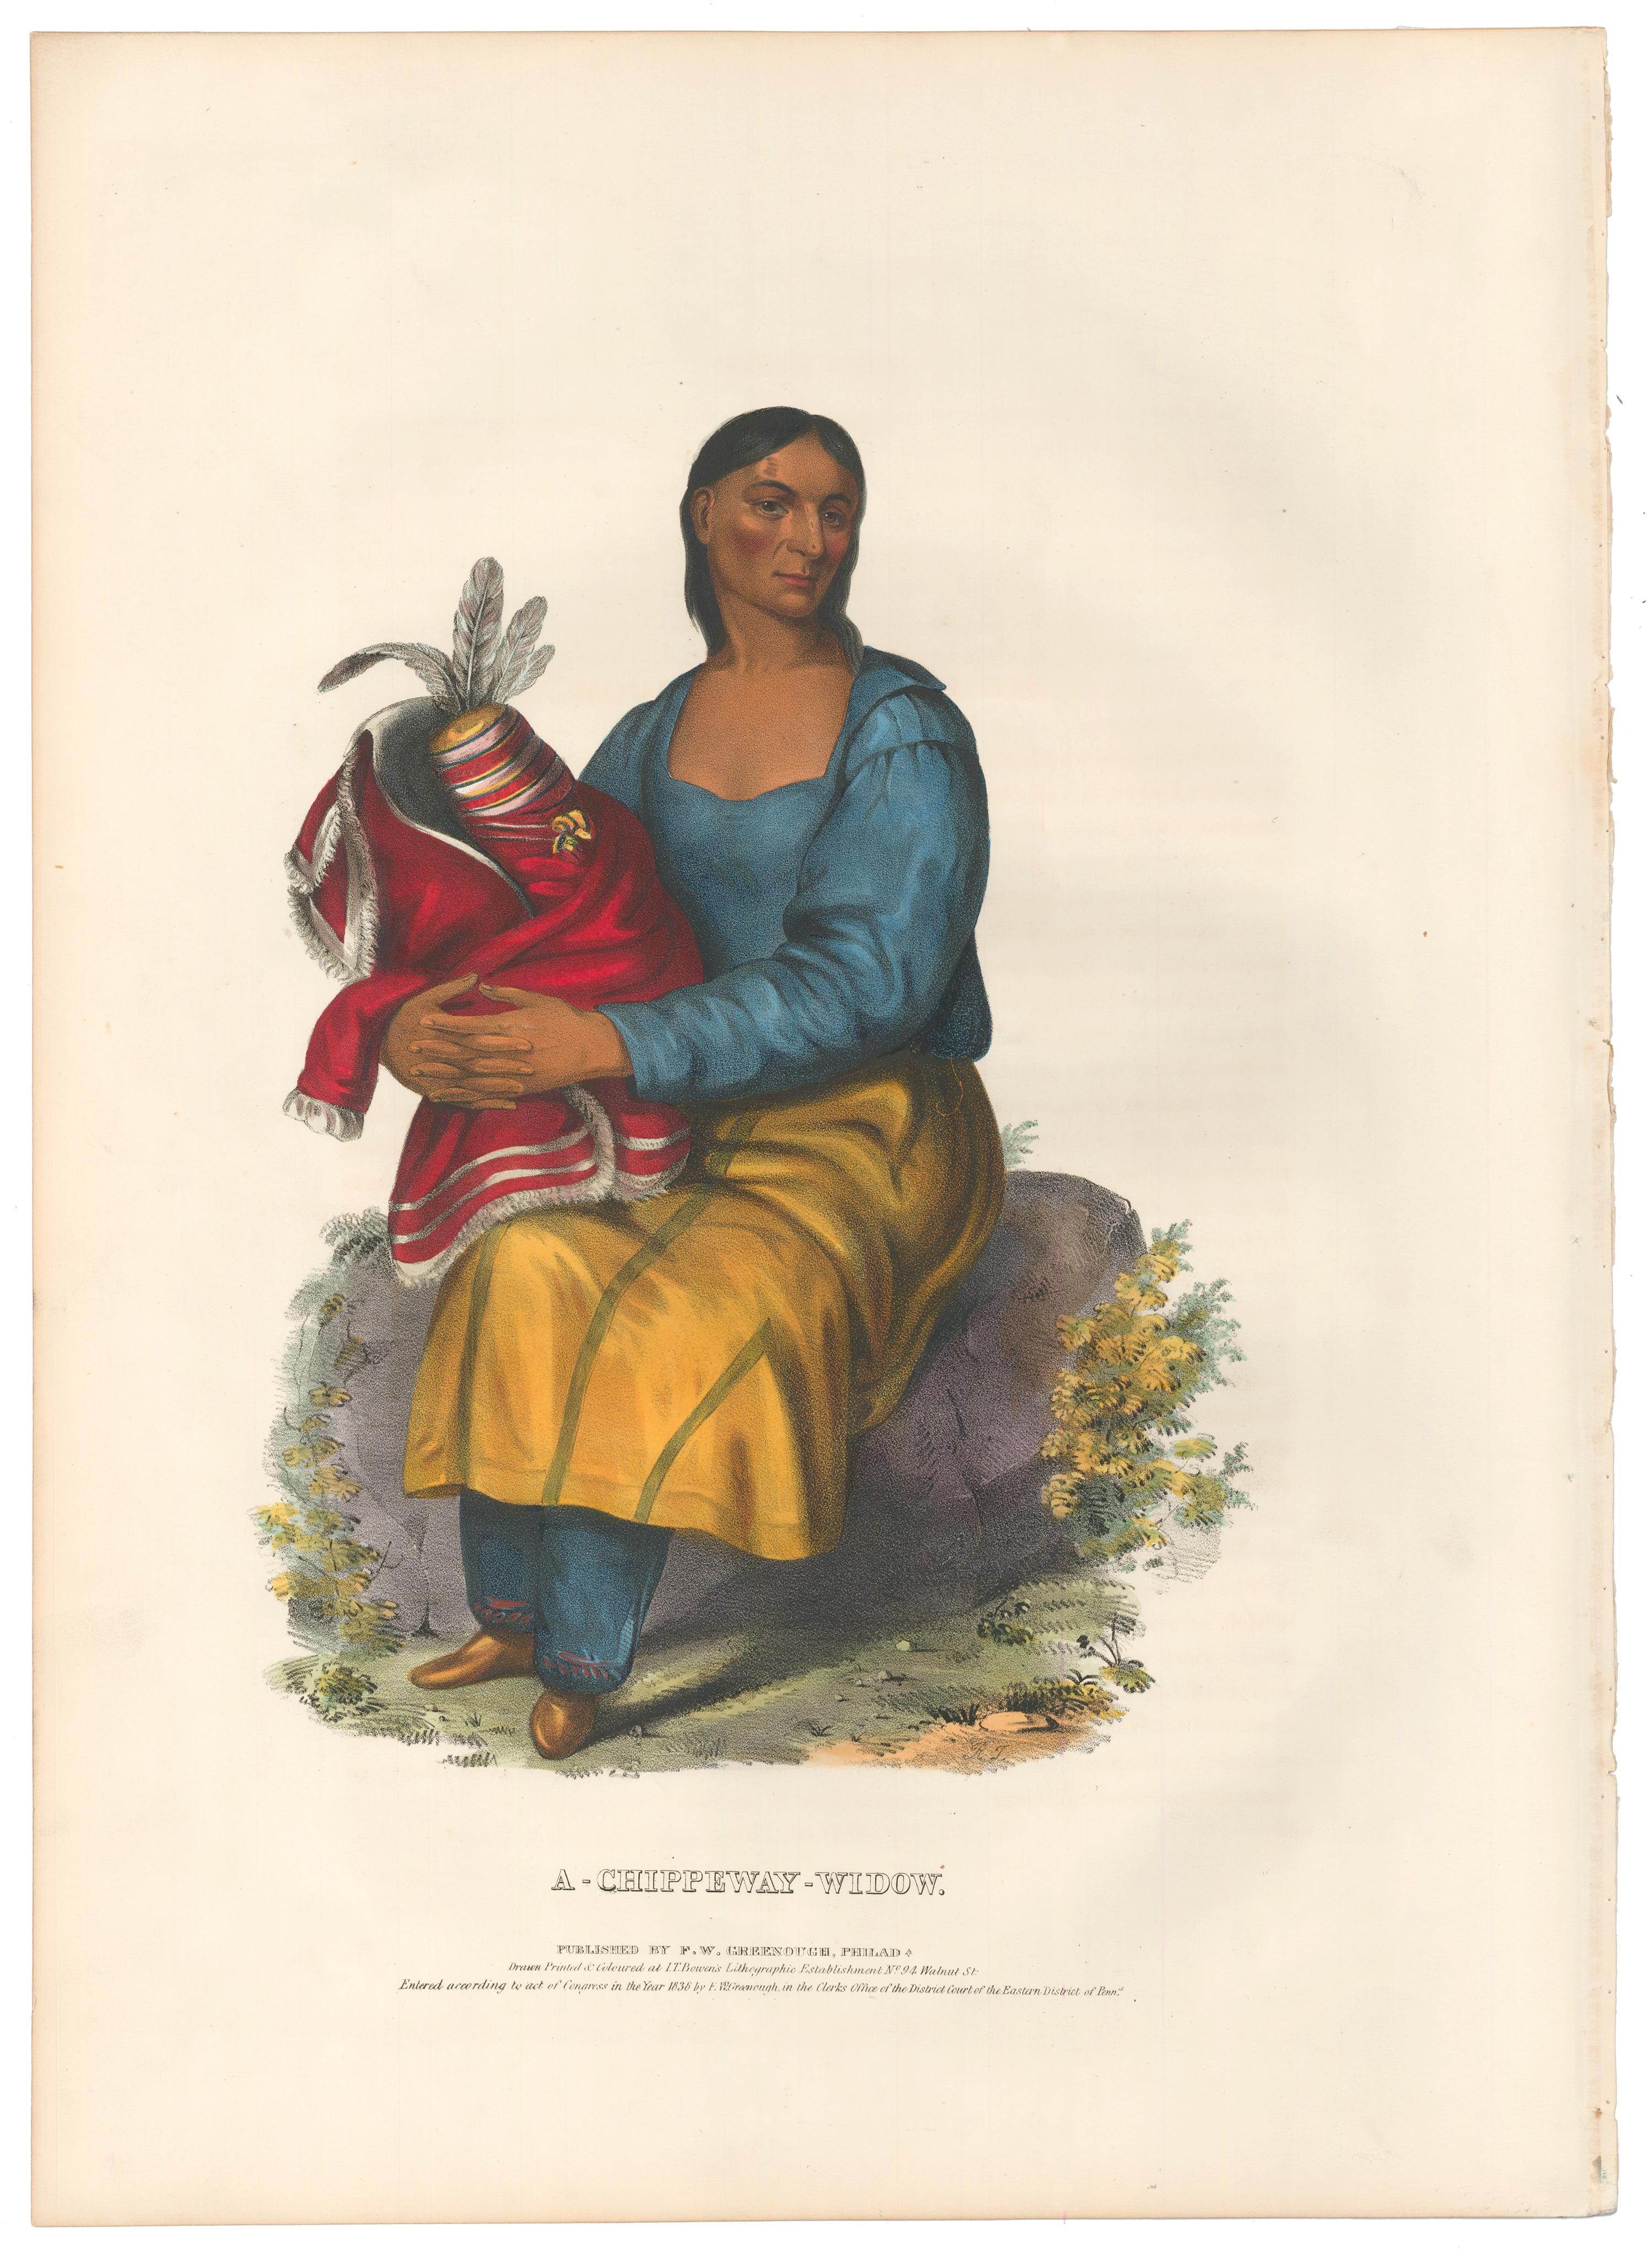 A Chippeway Widow - Print by McKenney & Hall